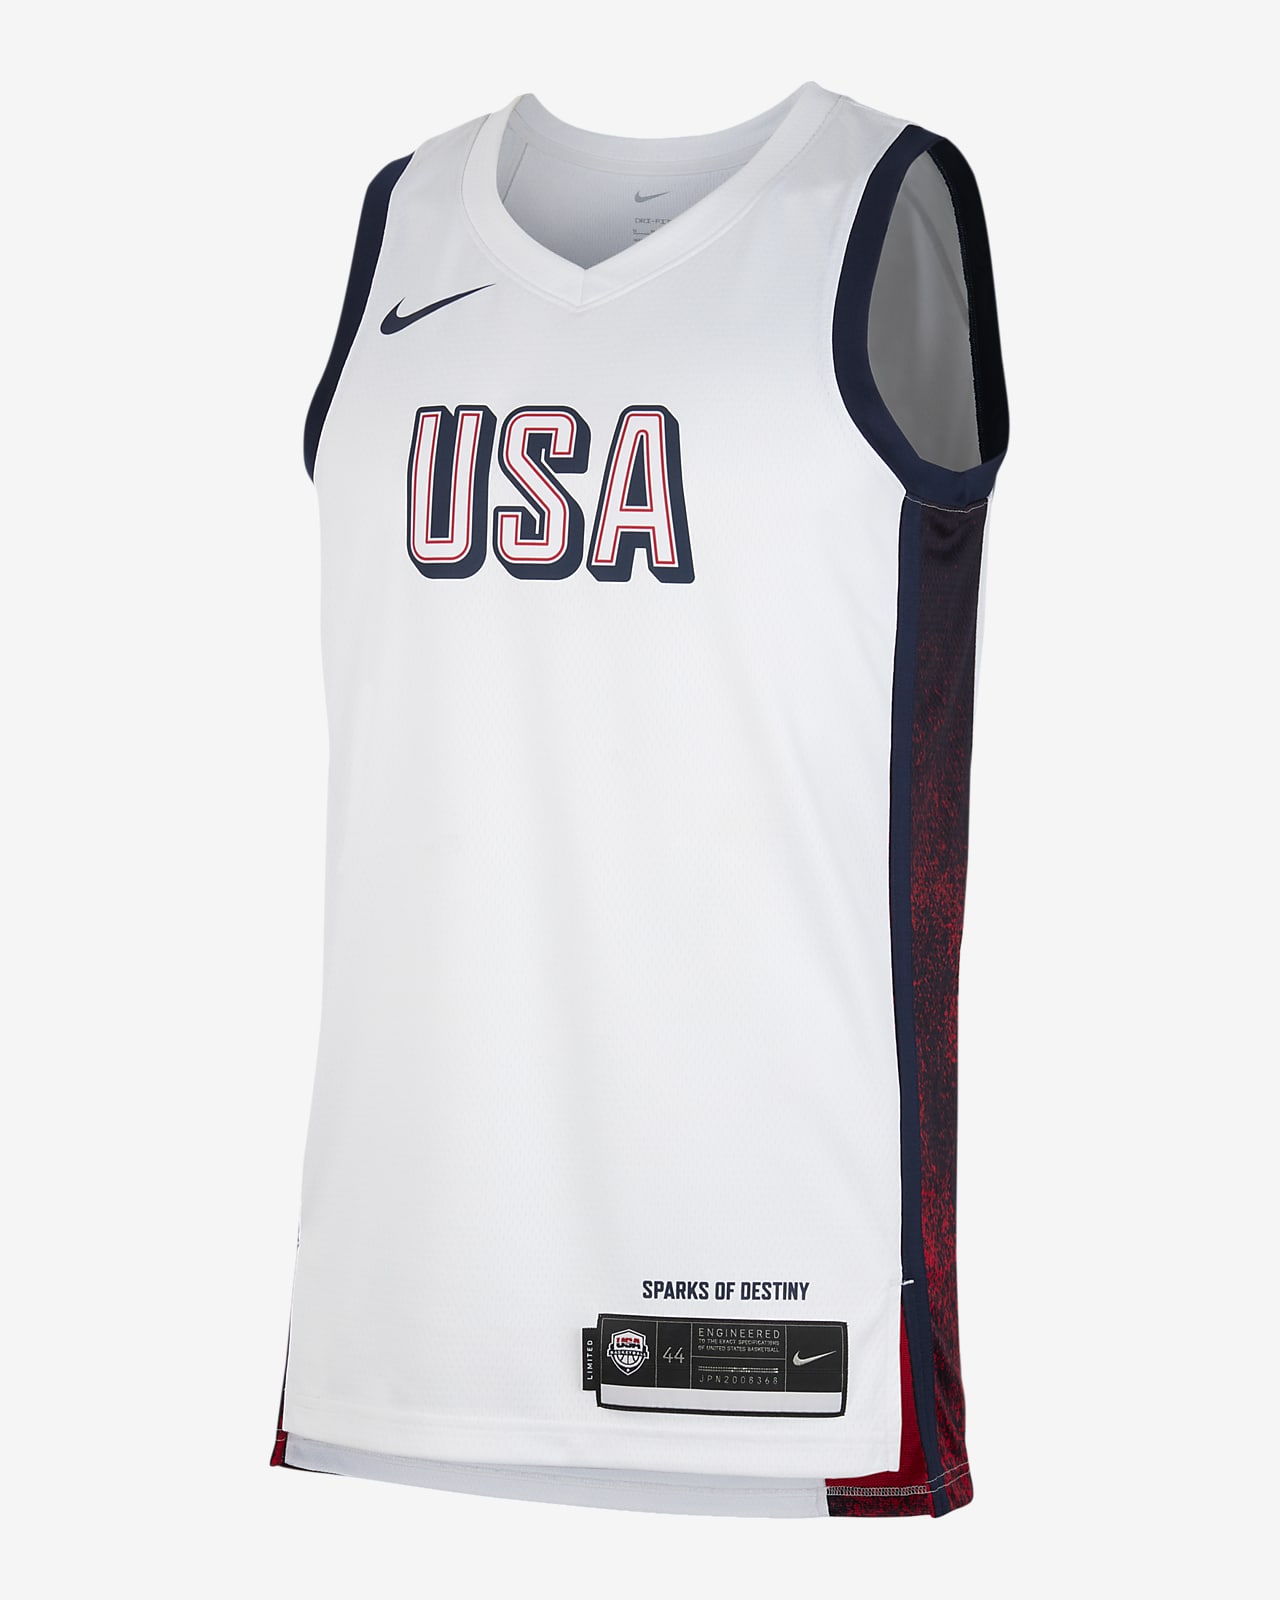 USAB Limited Home Nike basketbaljersey voor heren